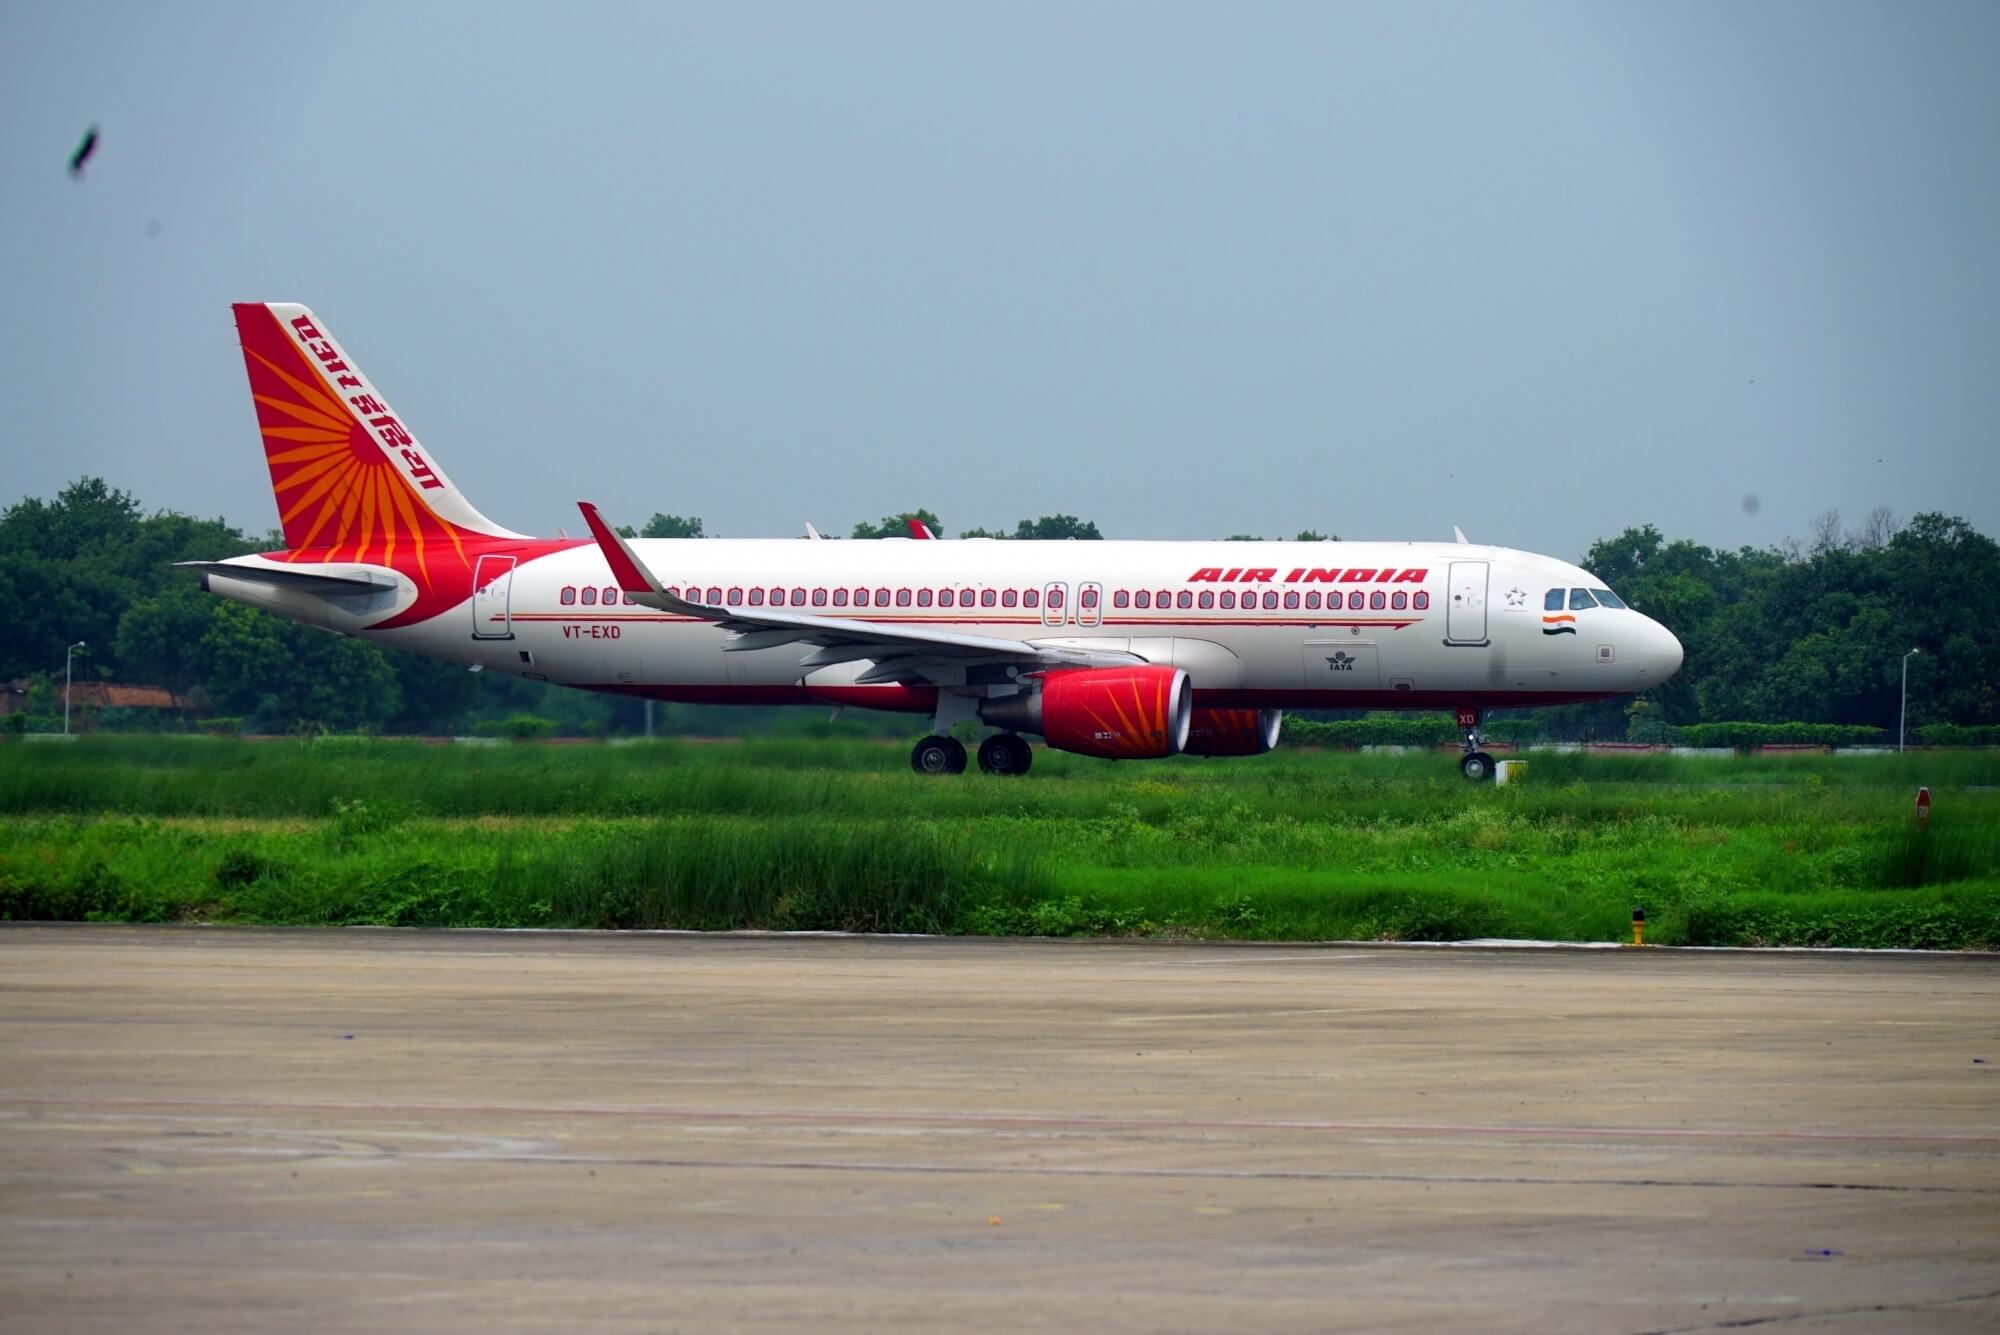 The Weekend Leader - Top Air India officials enjoying lavish perks amid 'austerity': Pilots